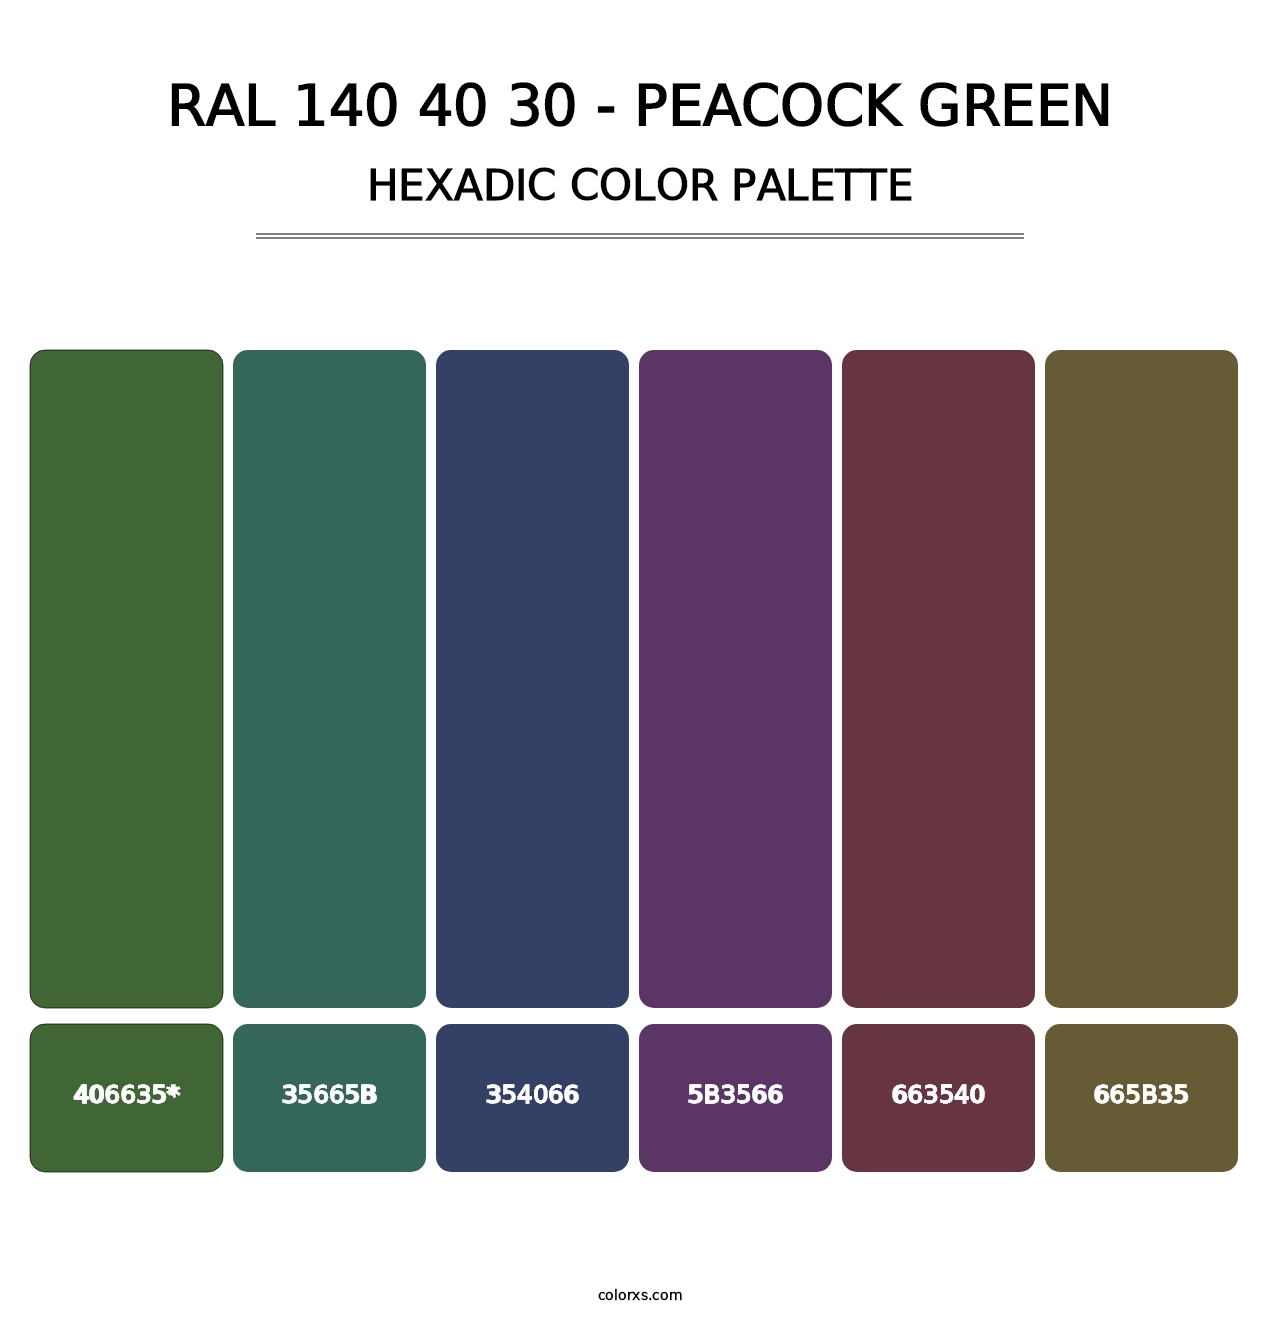 RAL 140 40 30 - Peacock Green - Hexadic Color Palette